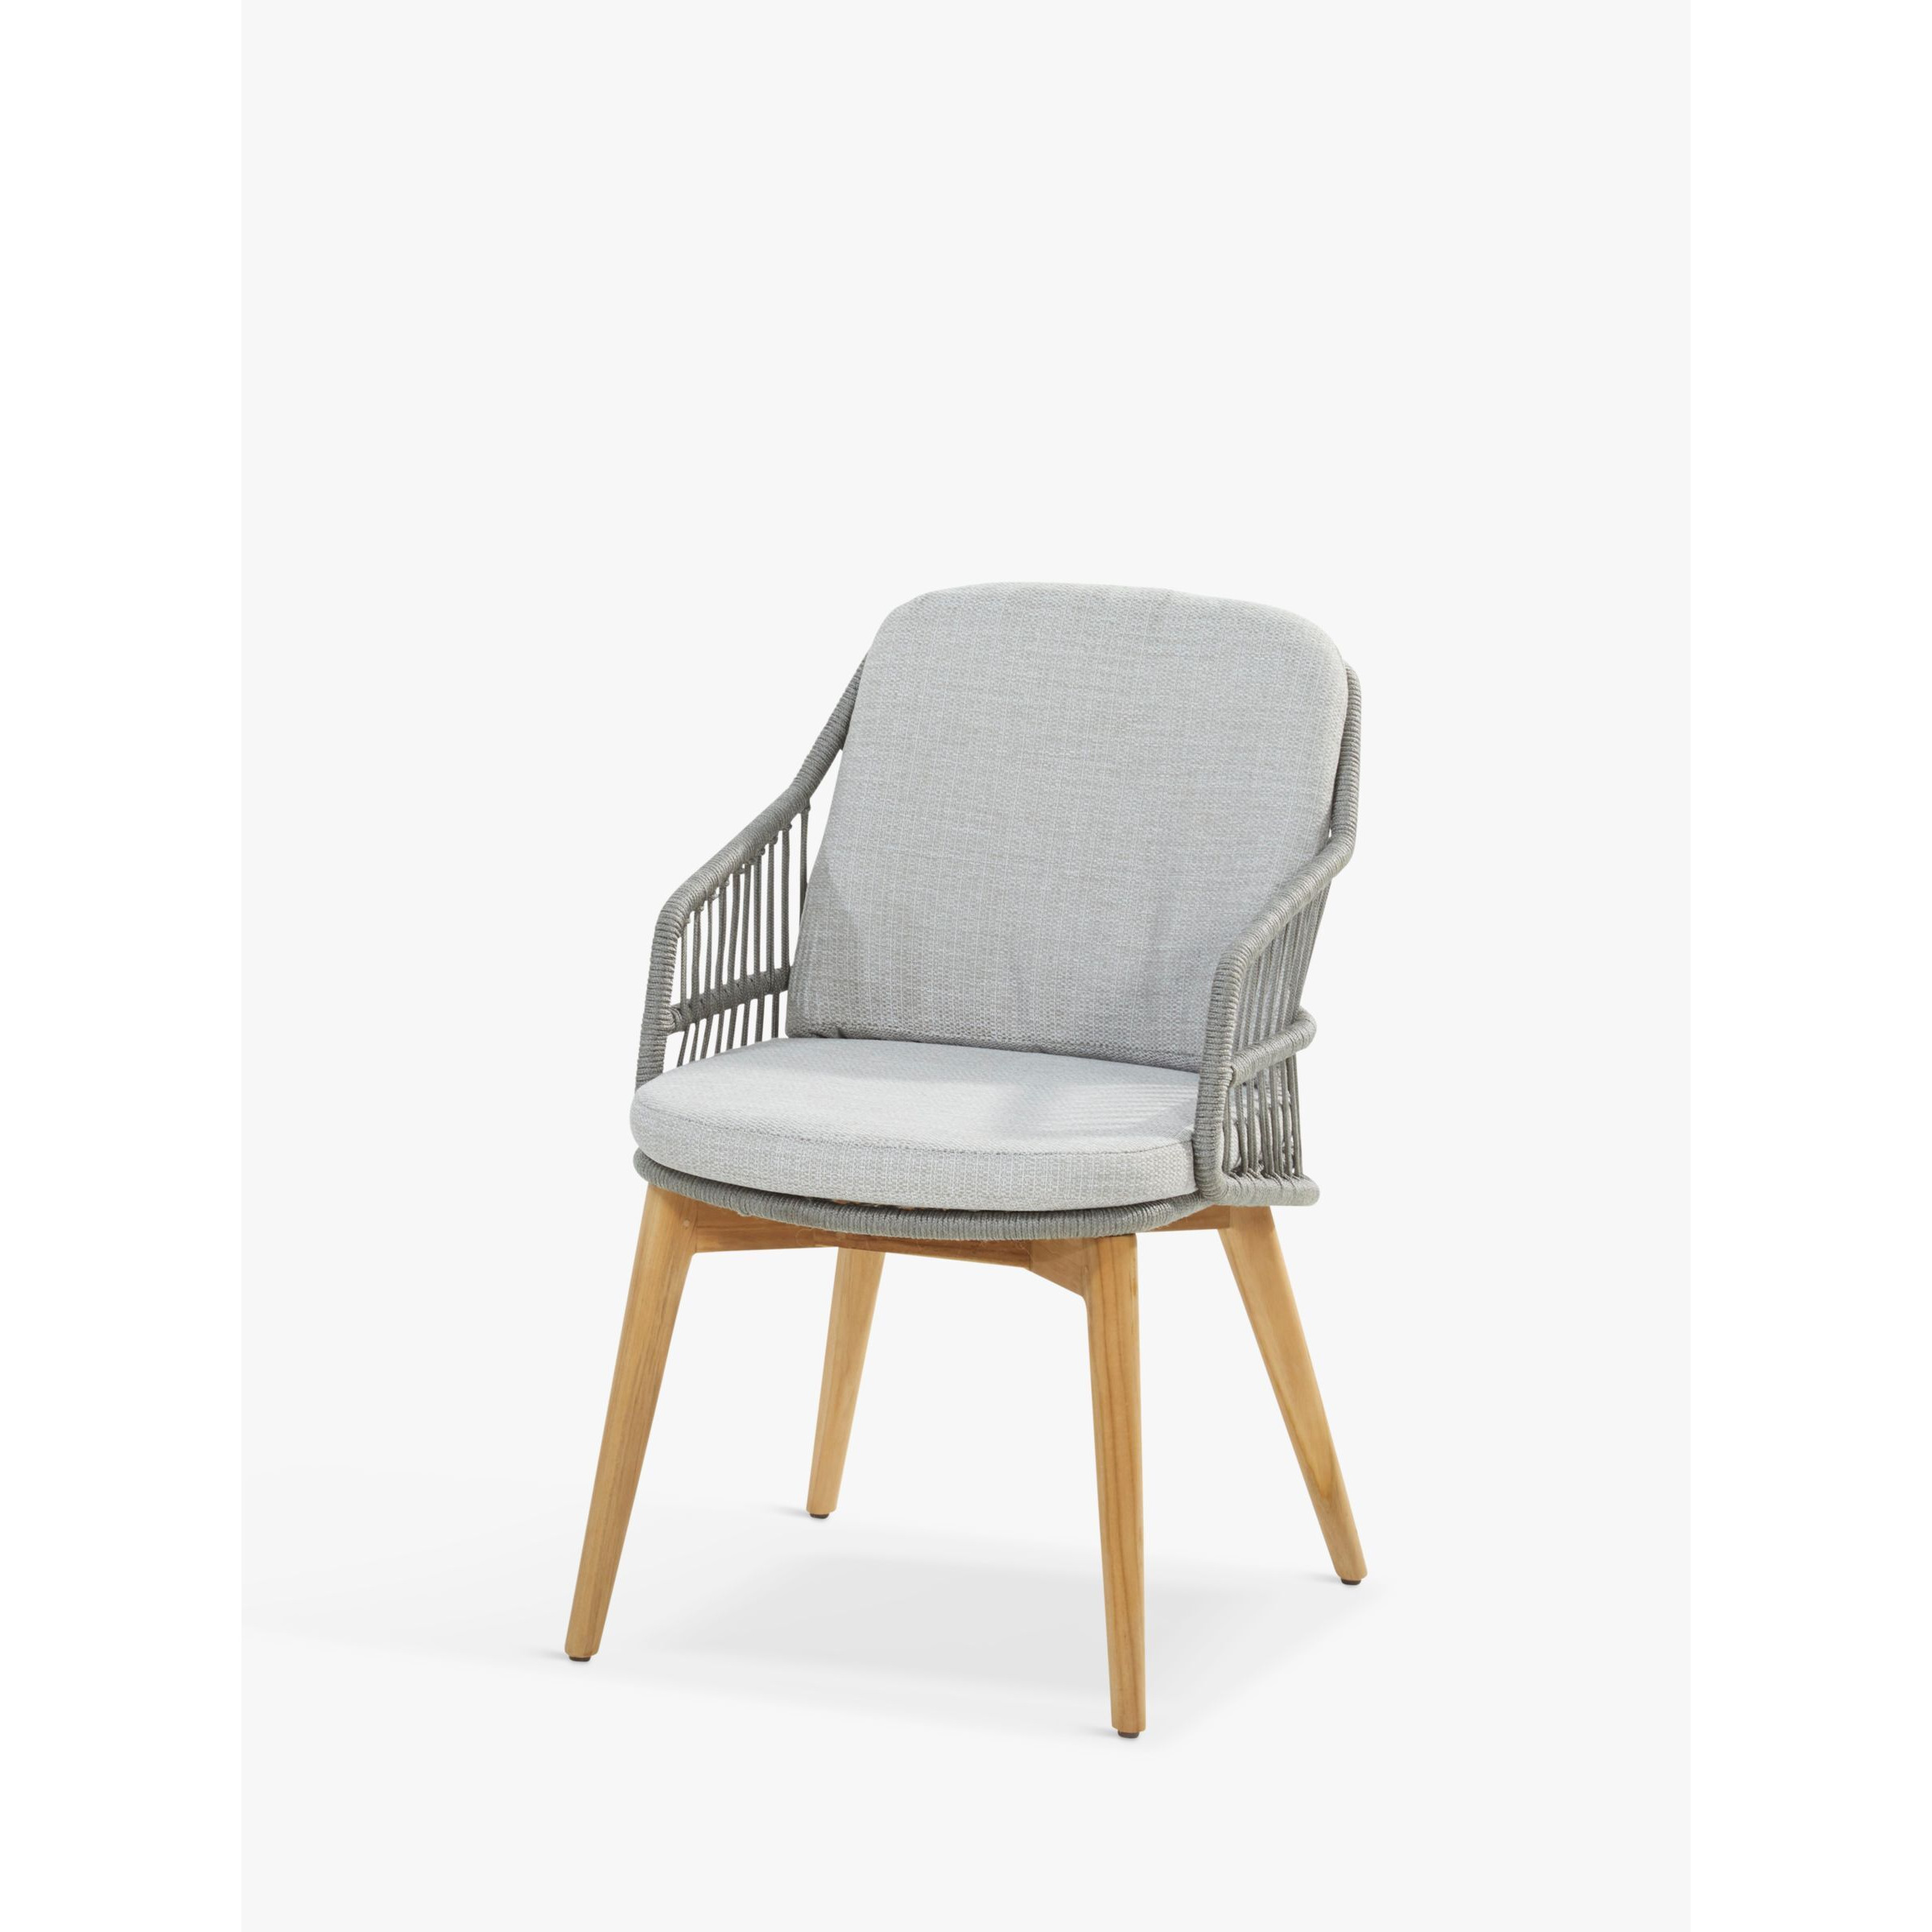 4 Seasons Outdoor Sempre Garden Dining Chair, Set of 2, FSC-Certified (Teak Wood), Silver Grey - image 1